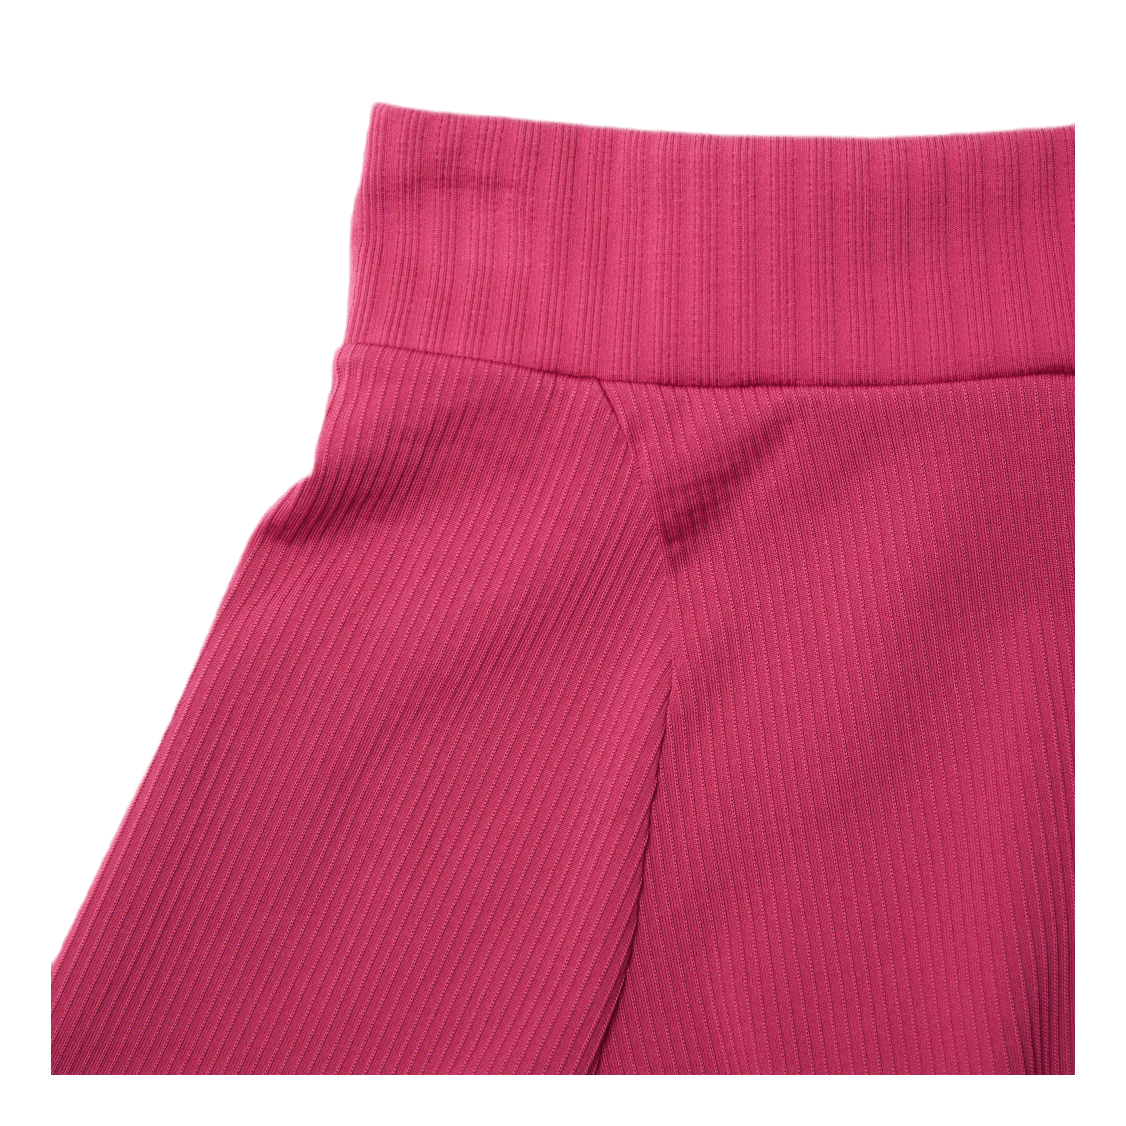 Skirt Primeknit Primeblue Pink